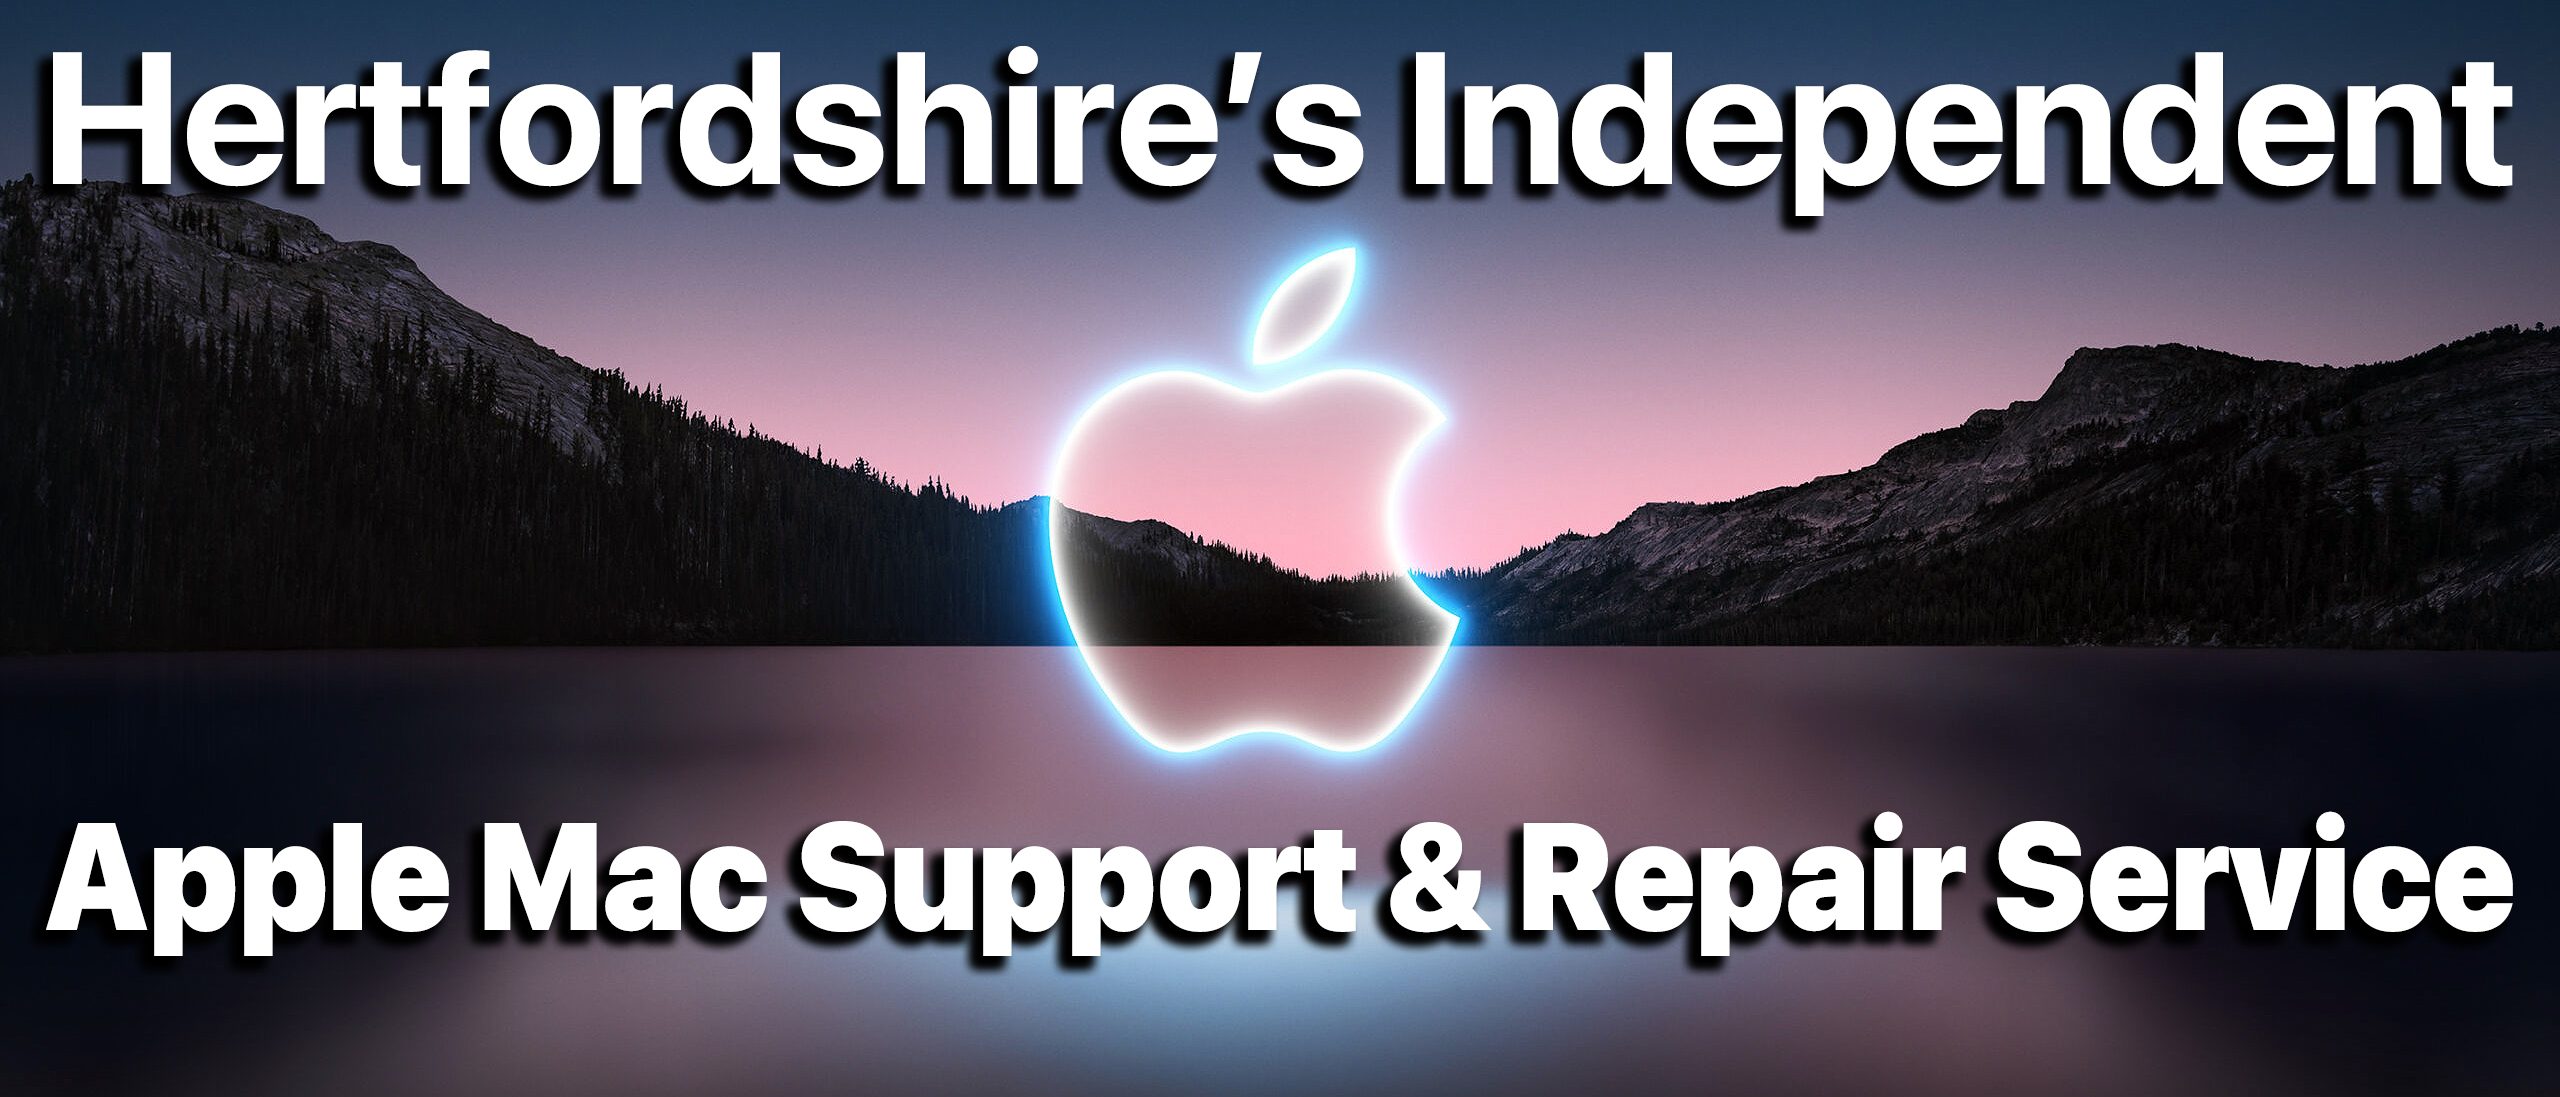 Apple Mac Repair Hertfordshire